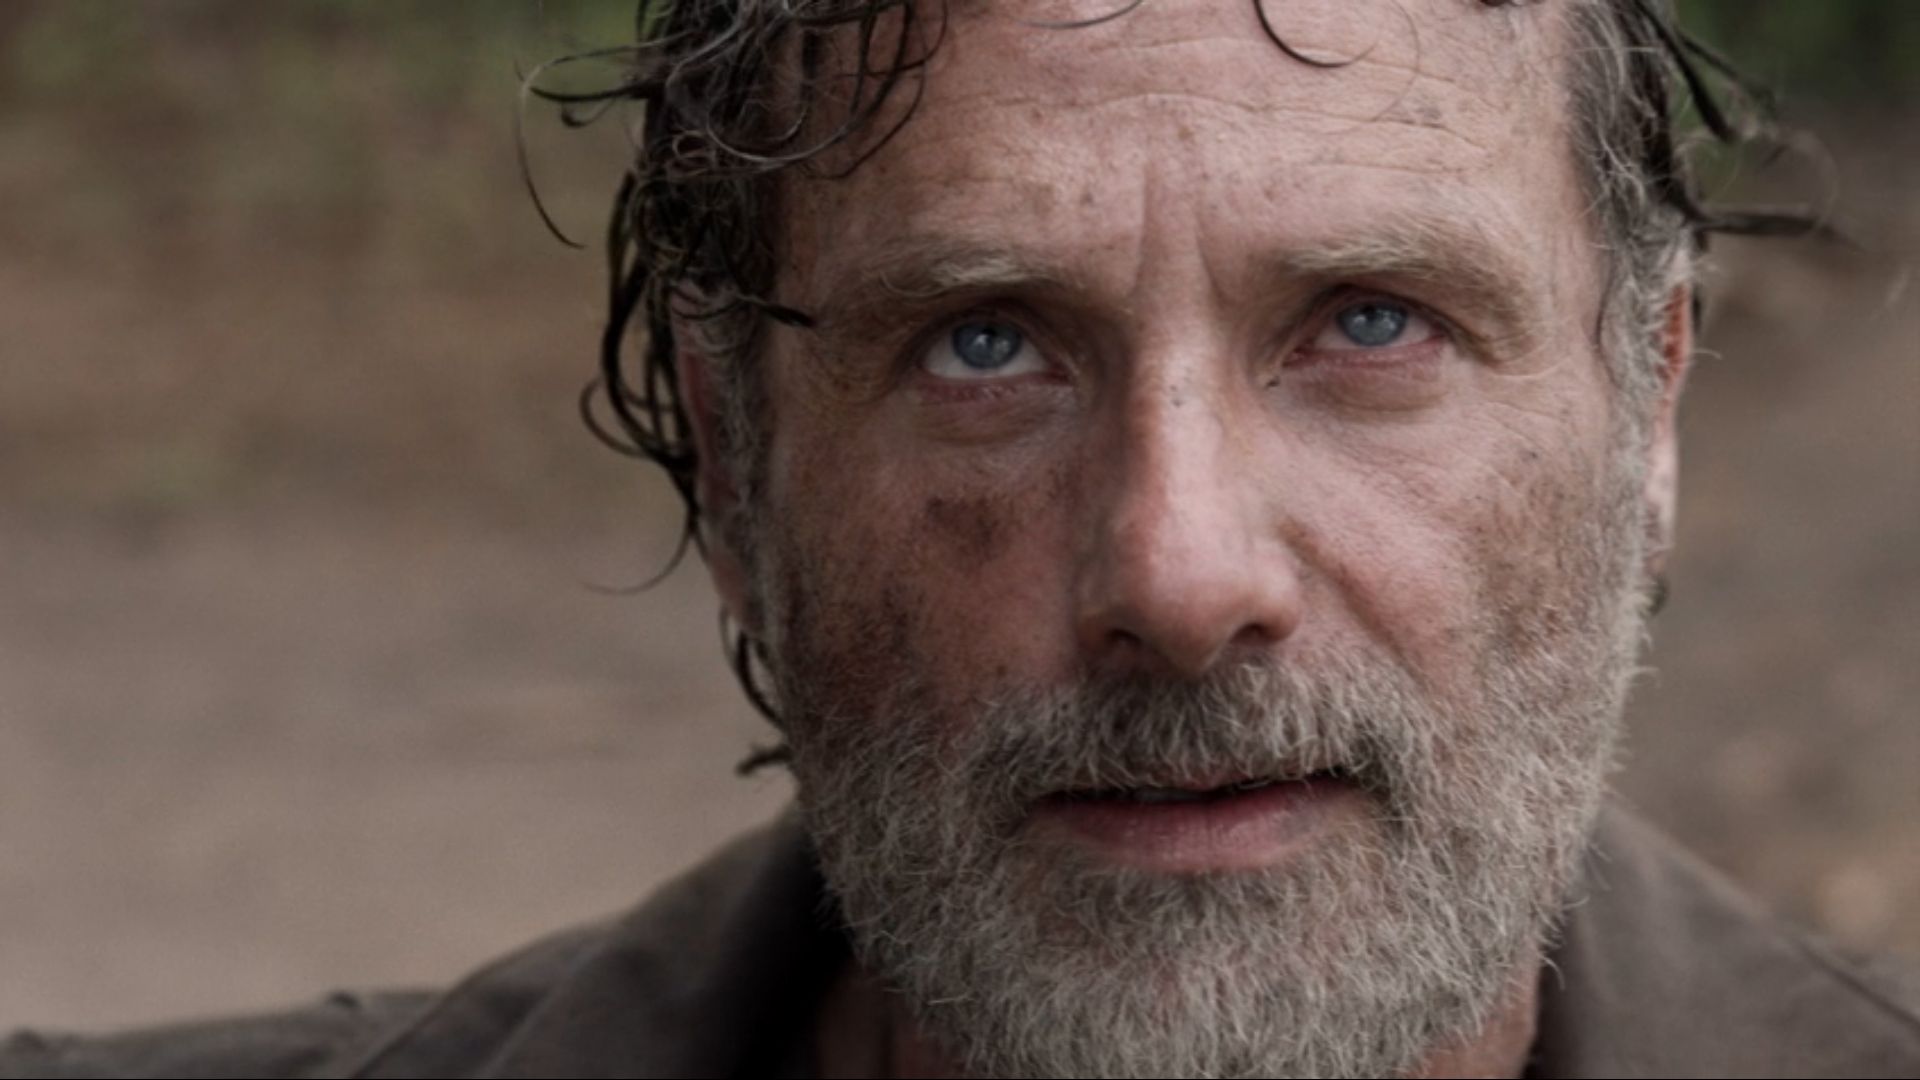 The Walking Dead: Daryl Dixon Season 1: Where to Watch & Stream Online